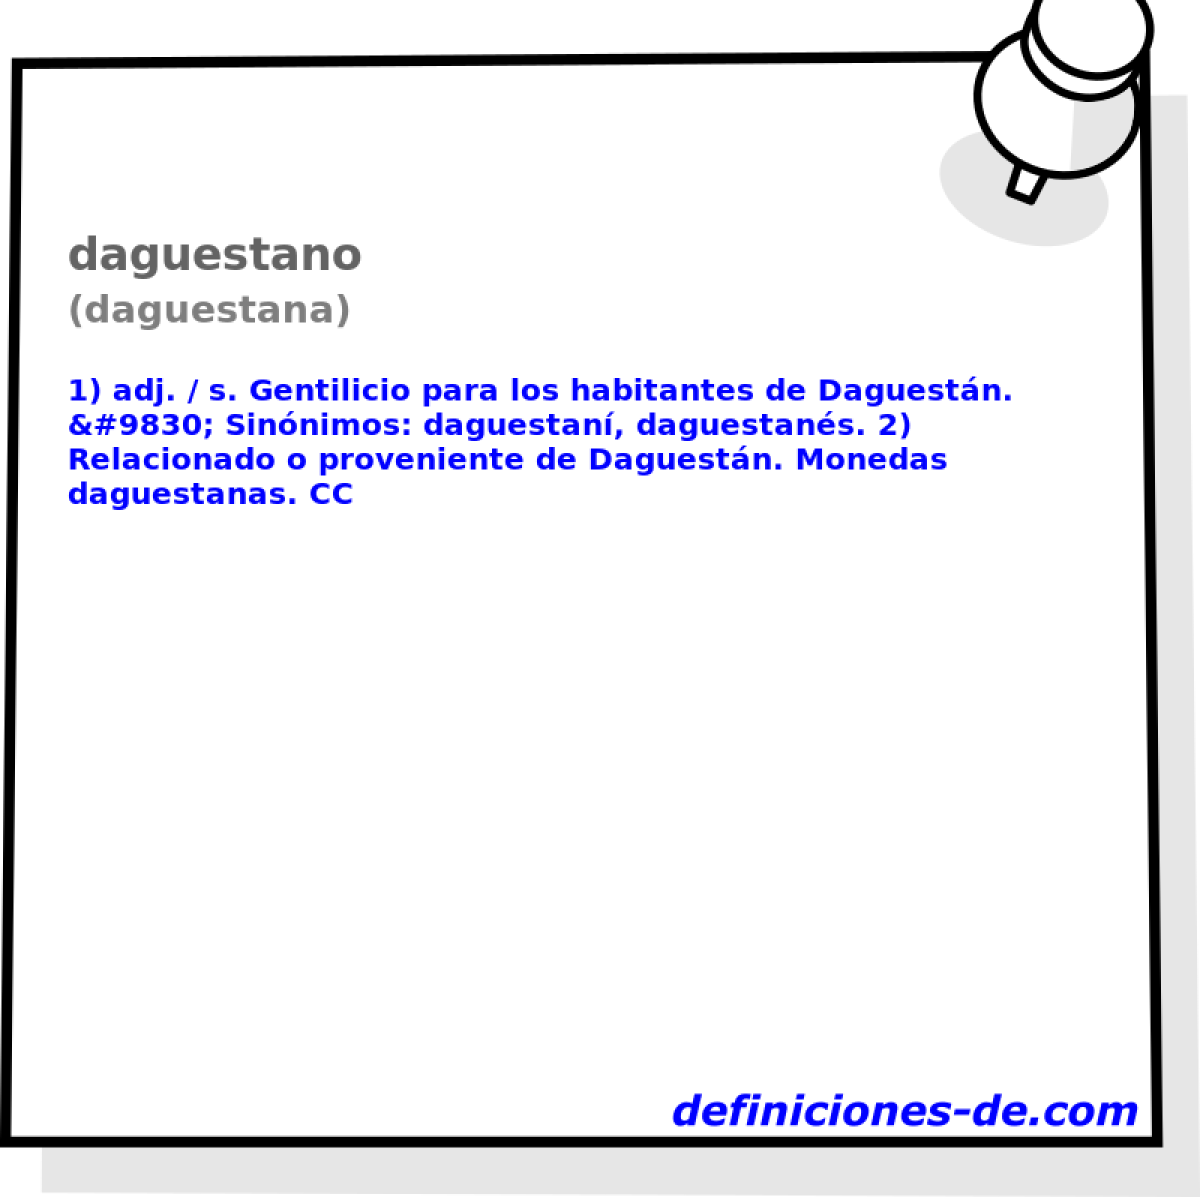 daguestano (daguestana)